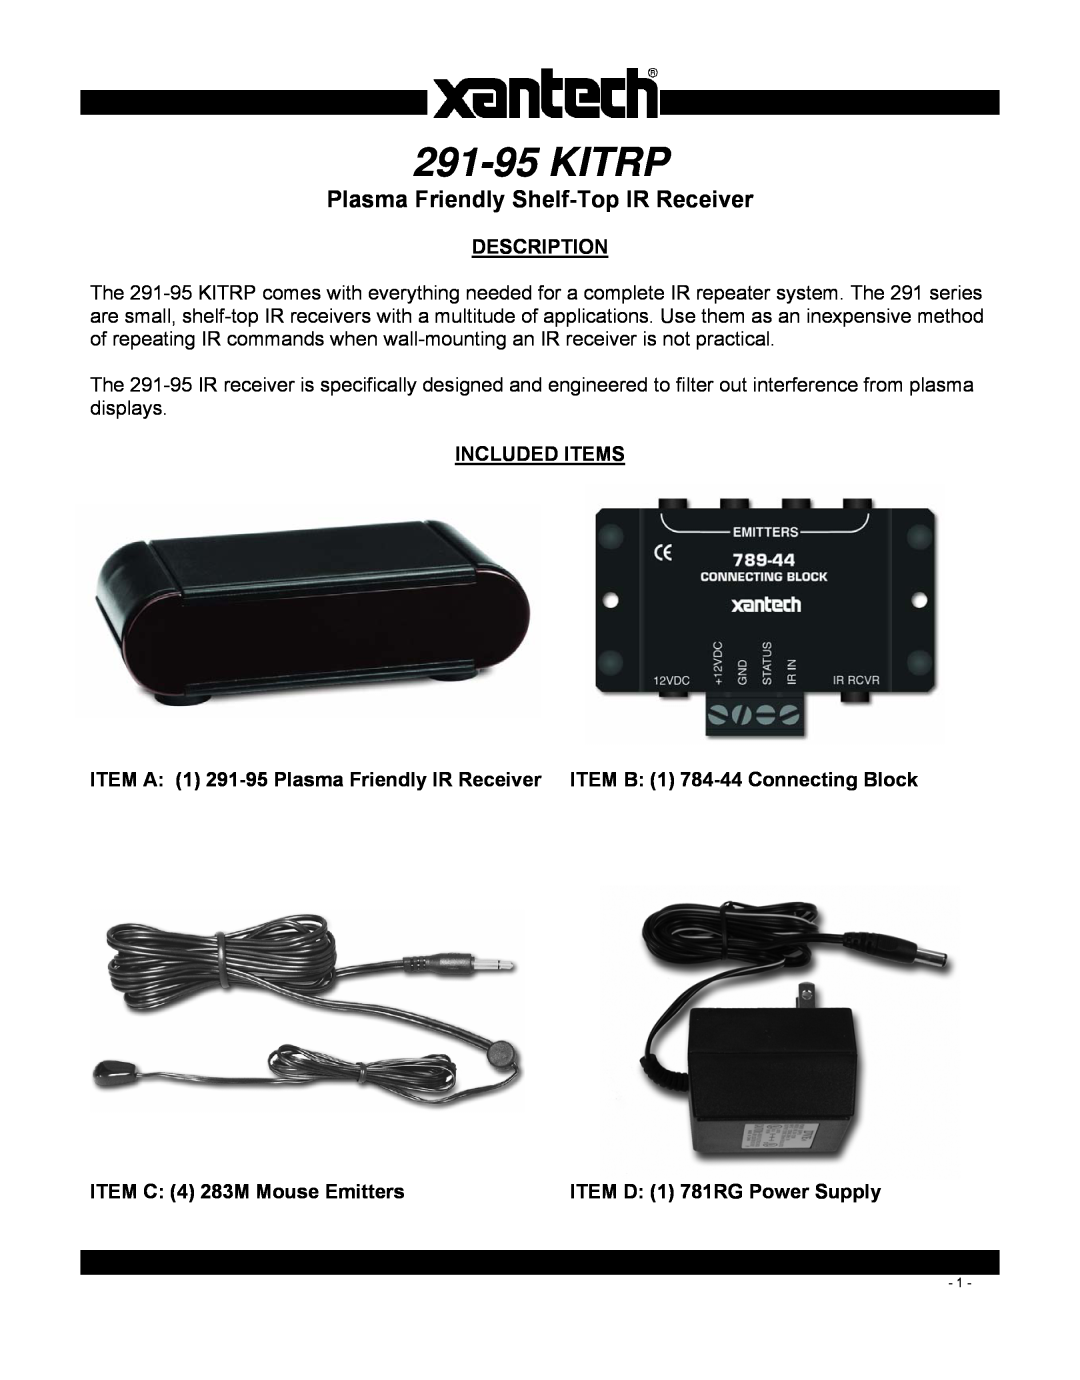 Xantech 291-95 KITRP manual Description, Included Items, ITEM C 4 283M Mouse Emitters, ITEM D 1 781RG Power Supply 